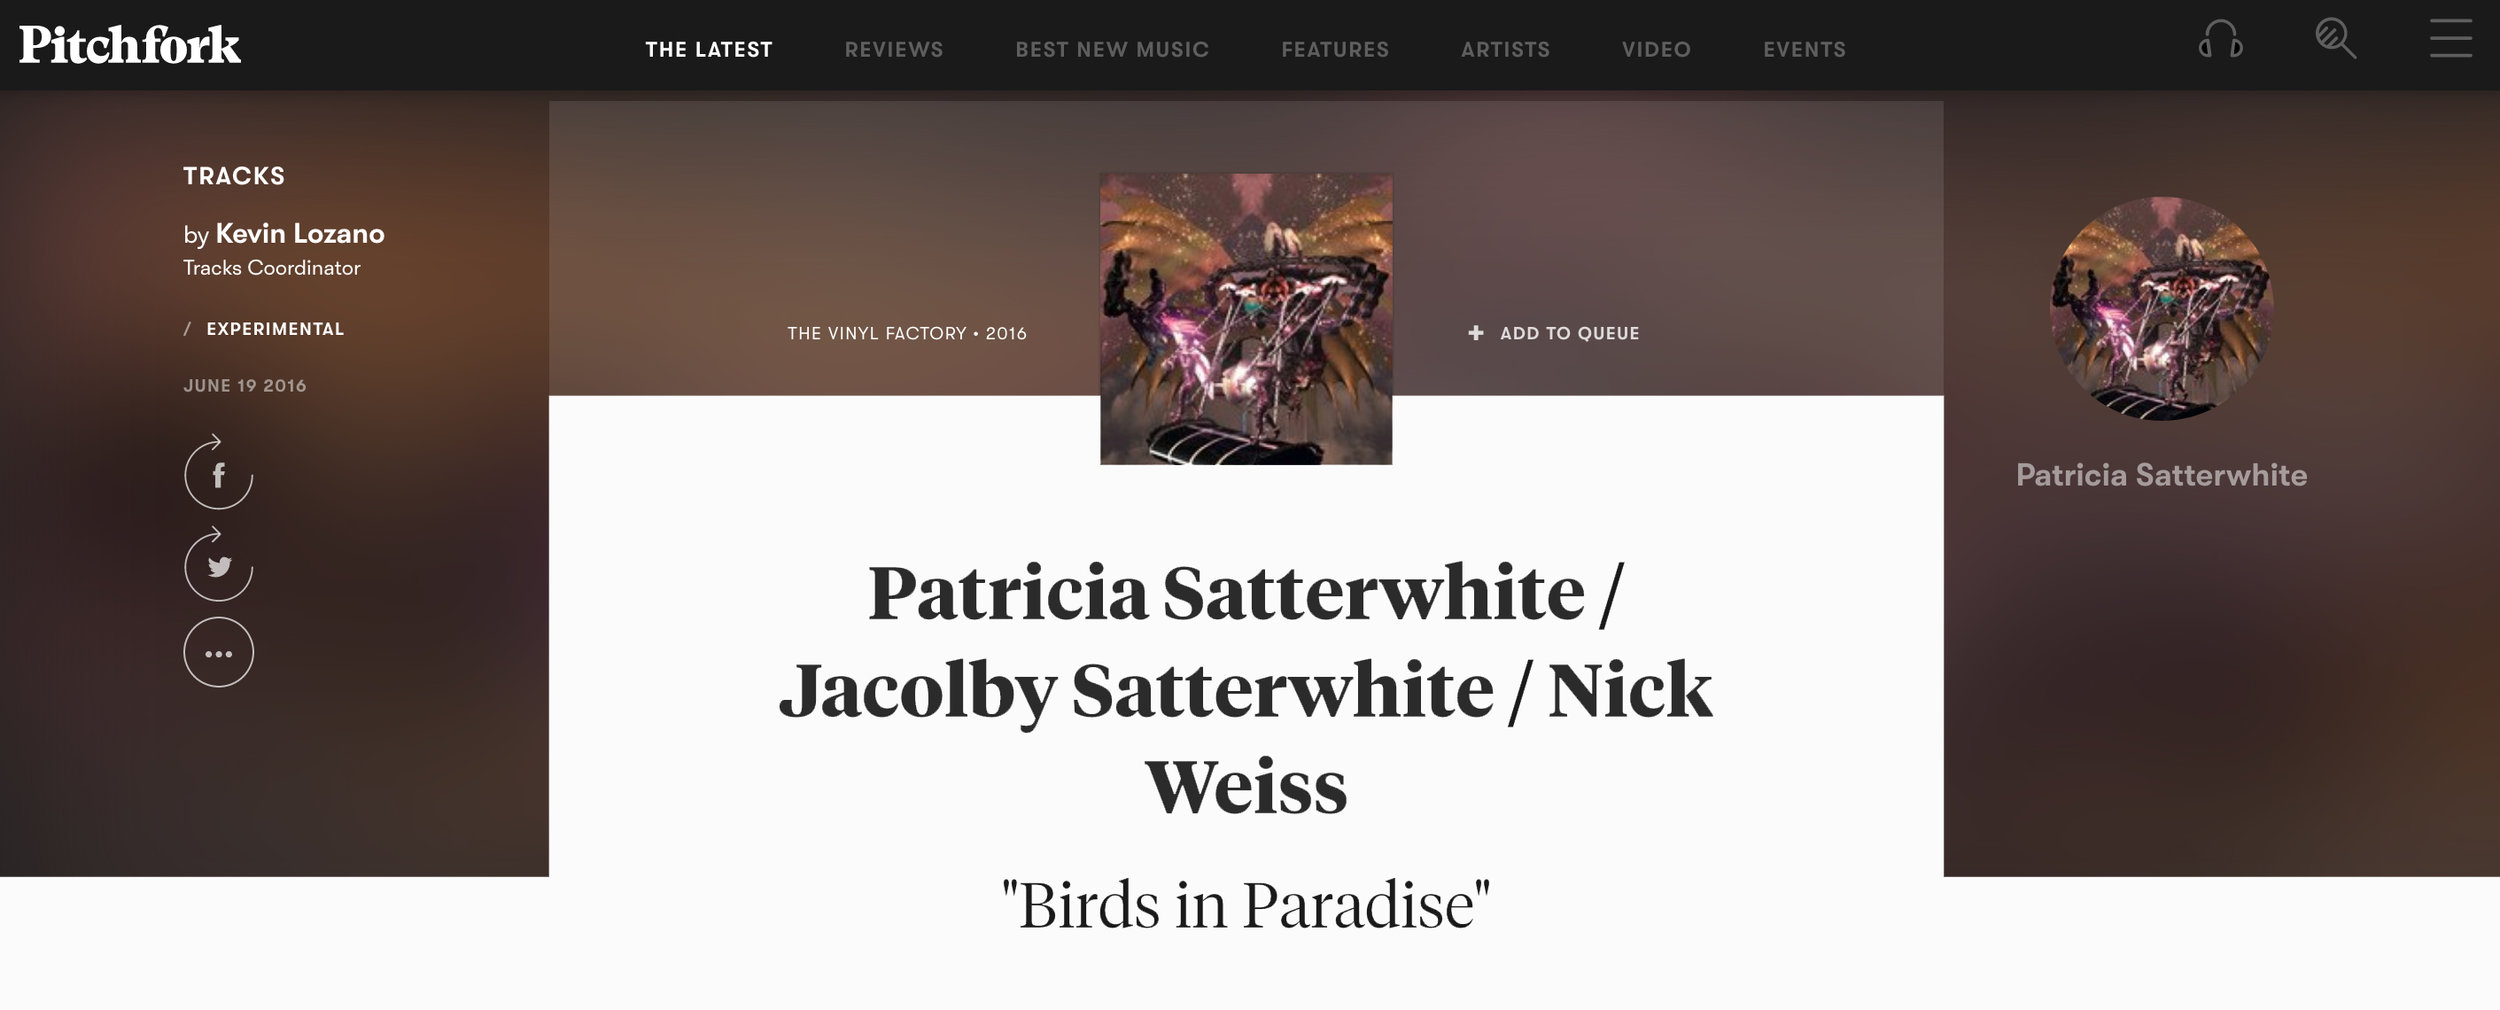 PAT - Birds in Paradise